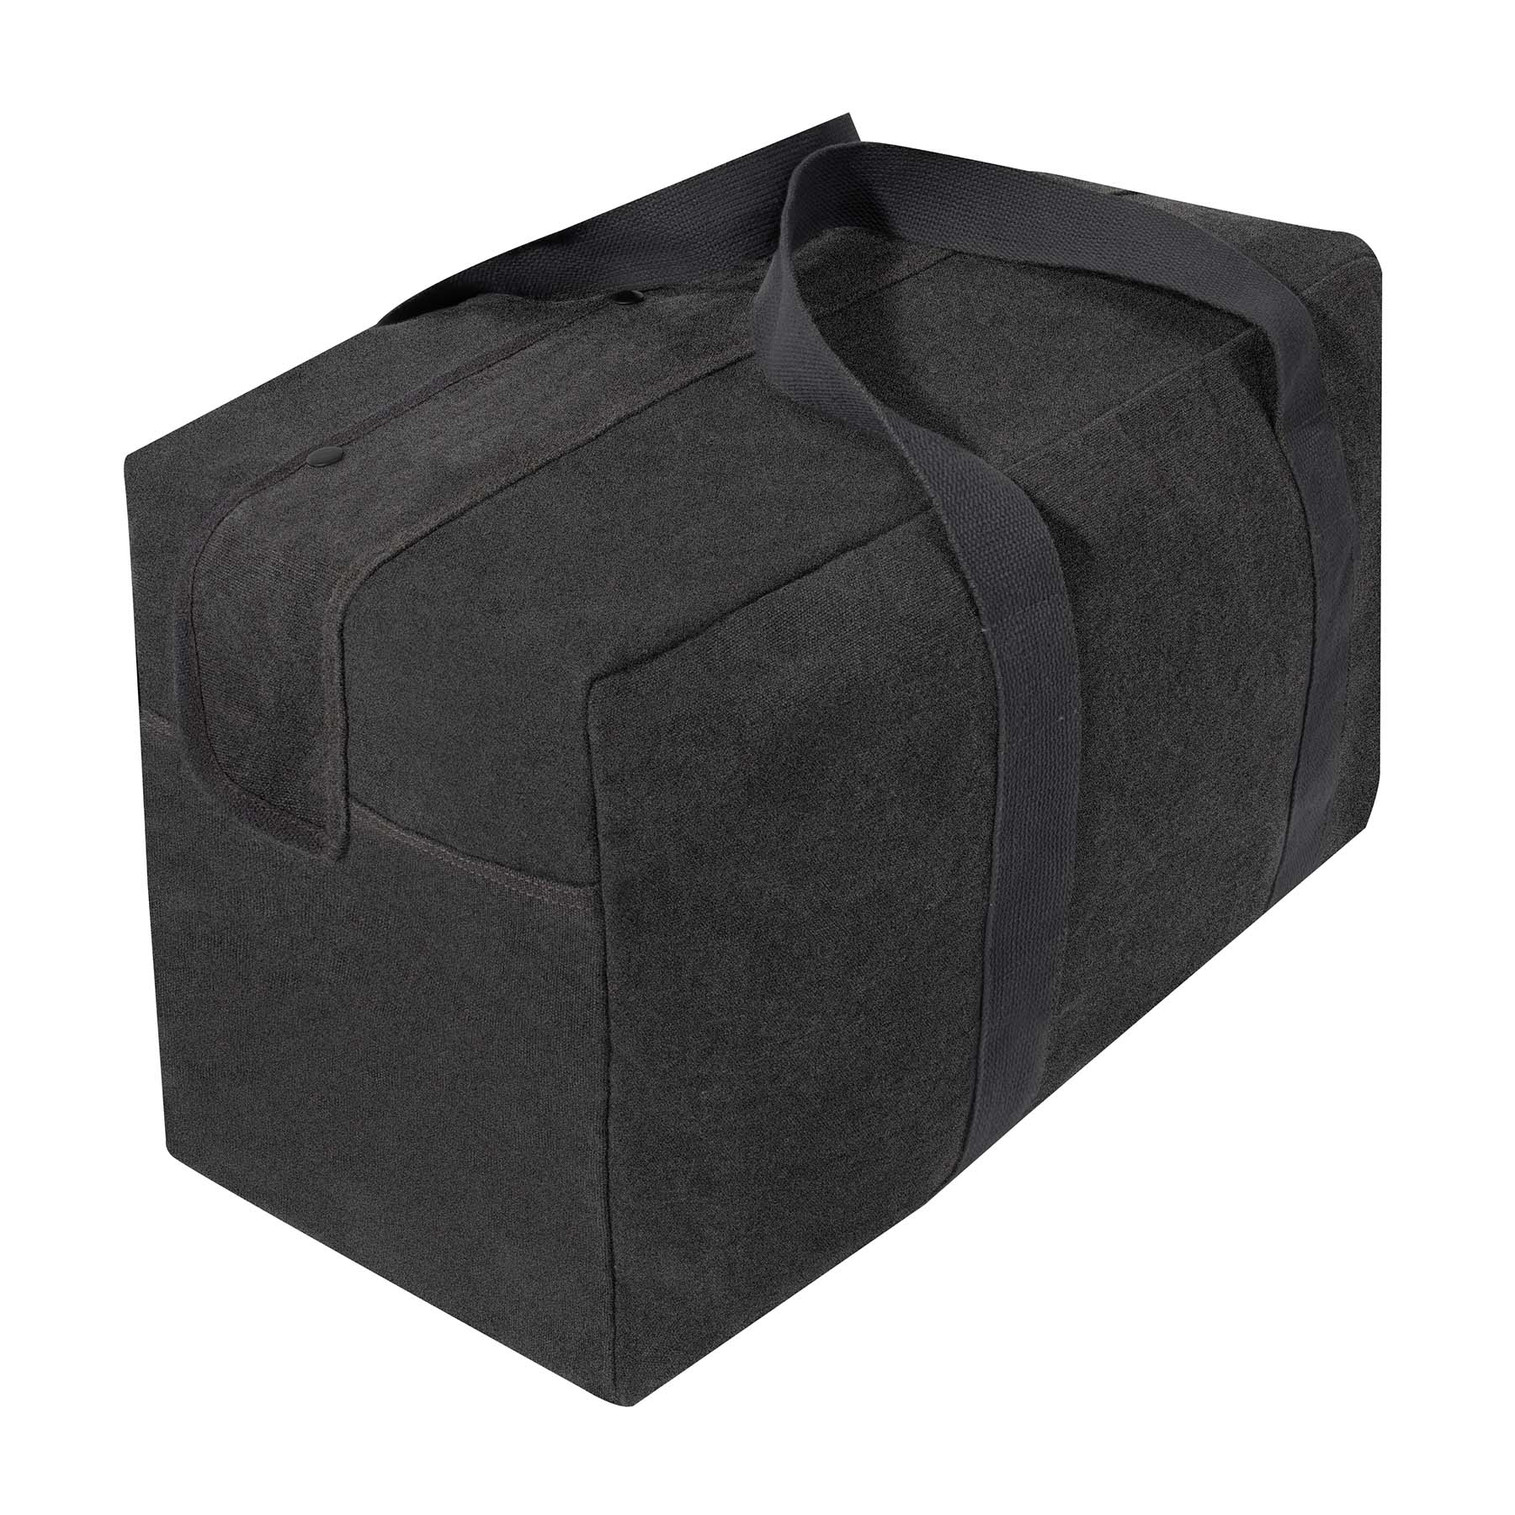 Rothco Canvas Parachute Cargo Bag - Charcoal Grey